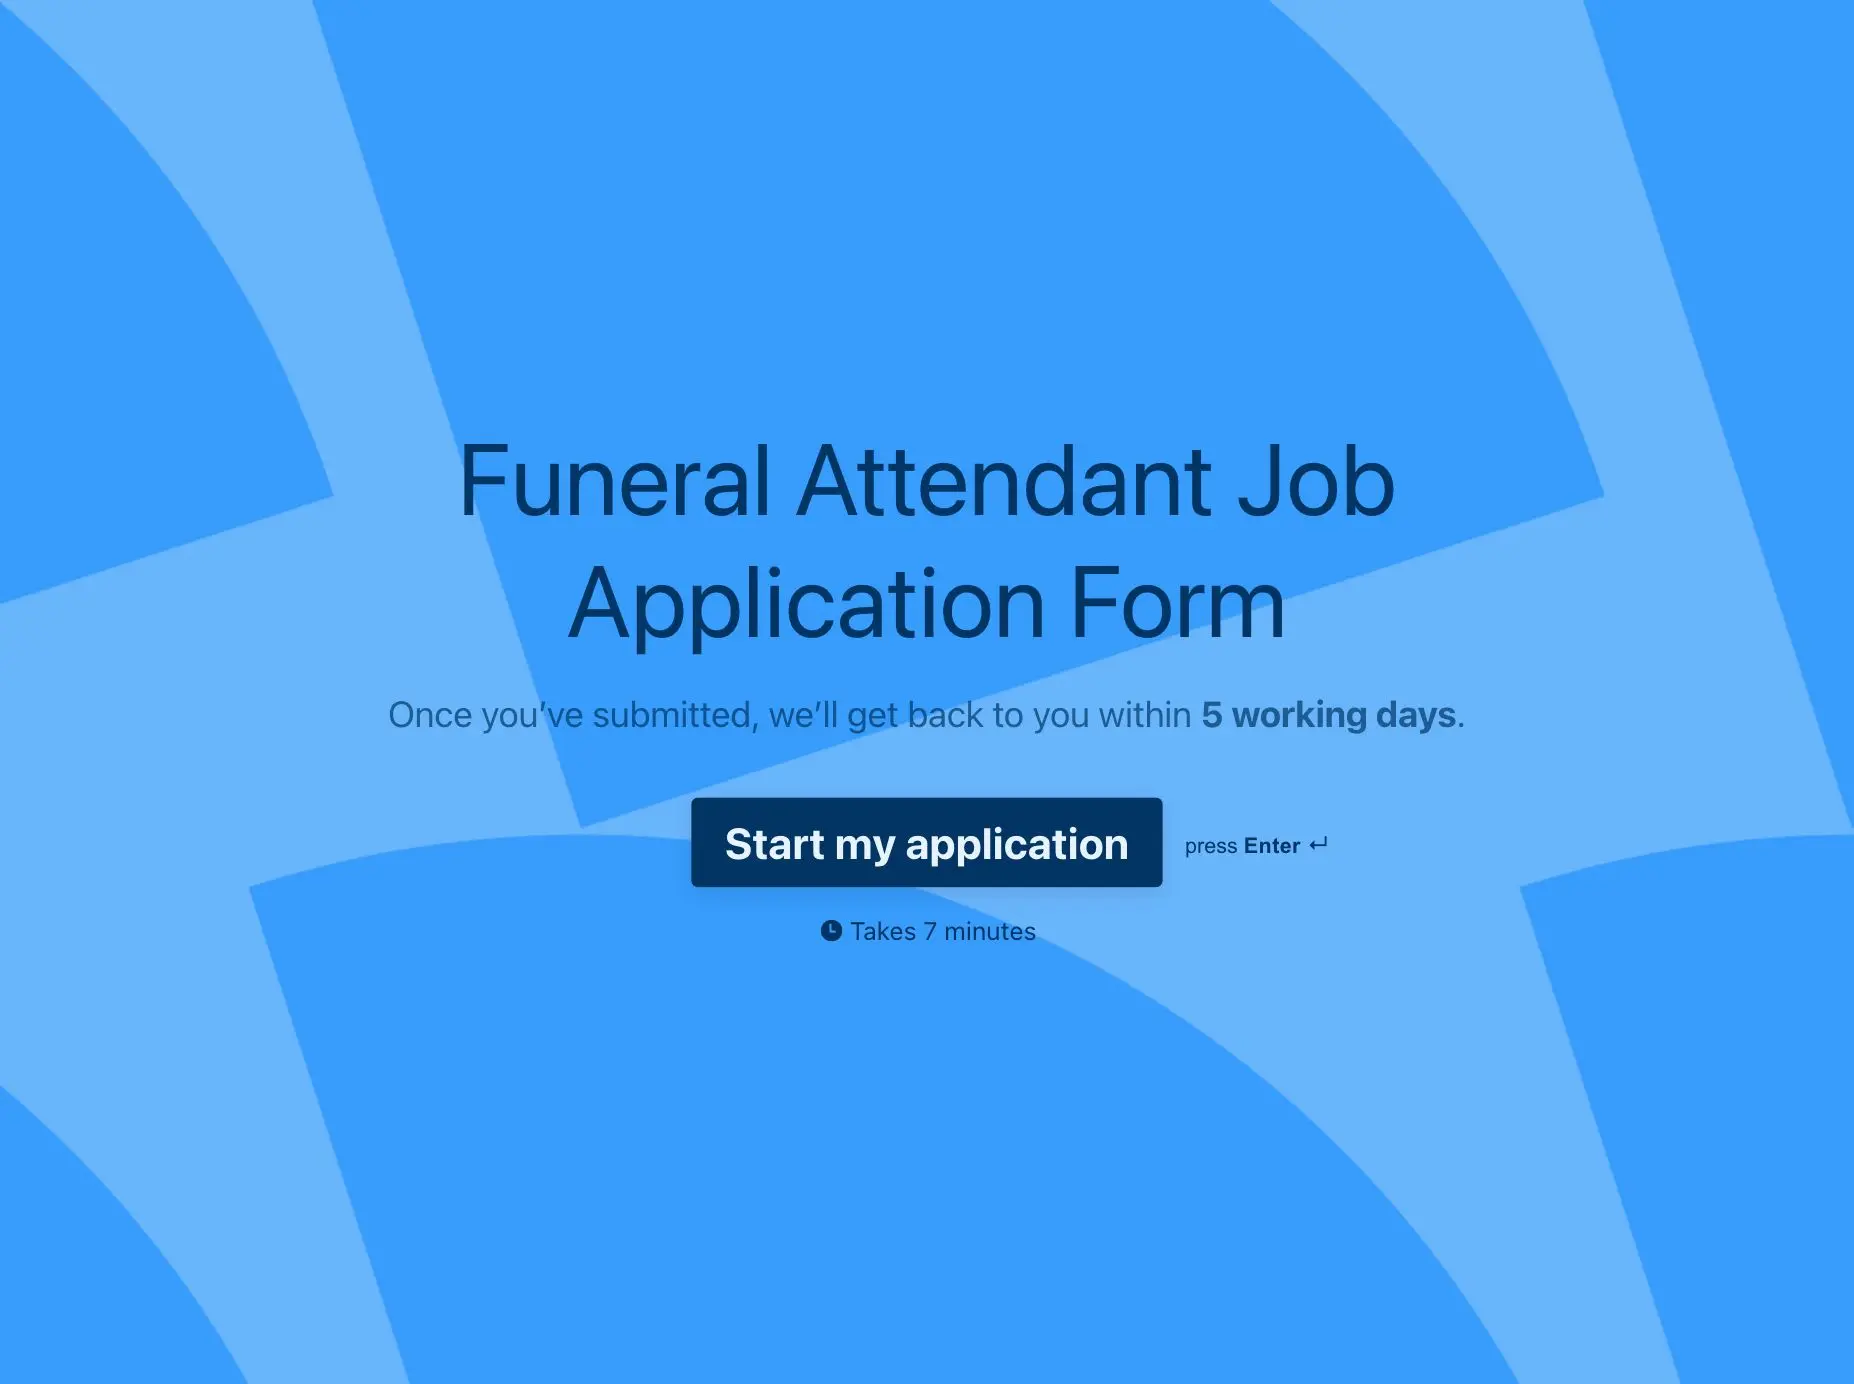 Funeral Attendant Job Application Form Template Hero